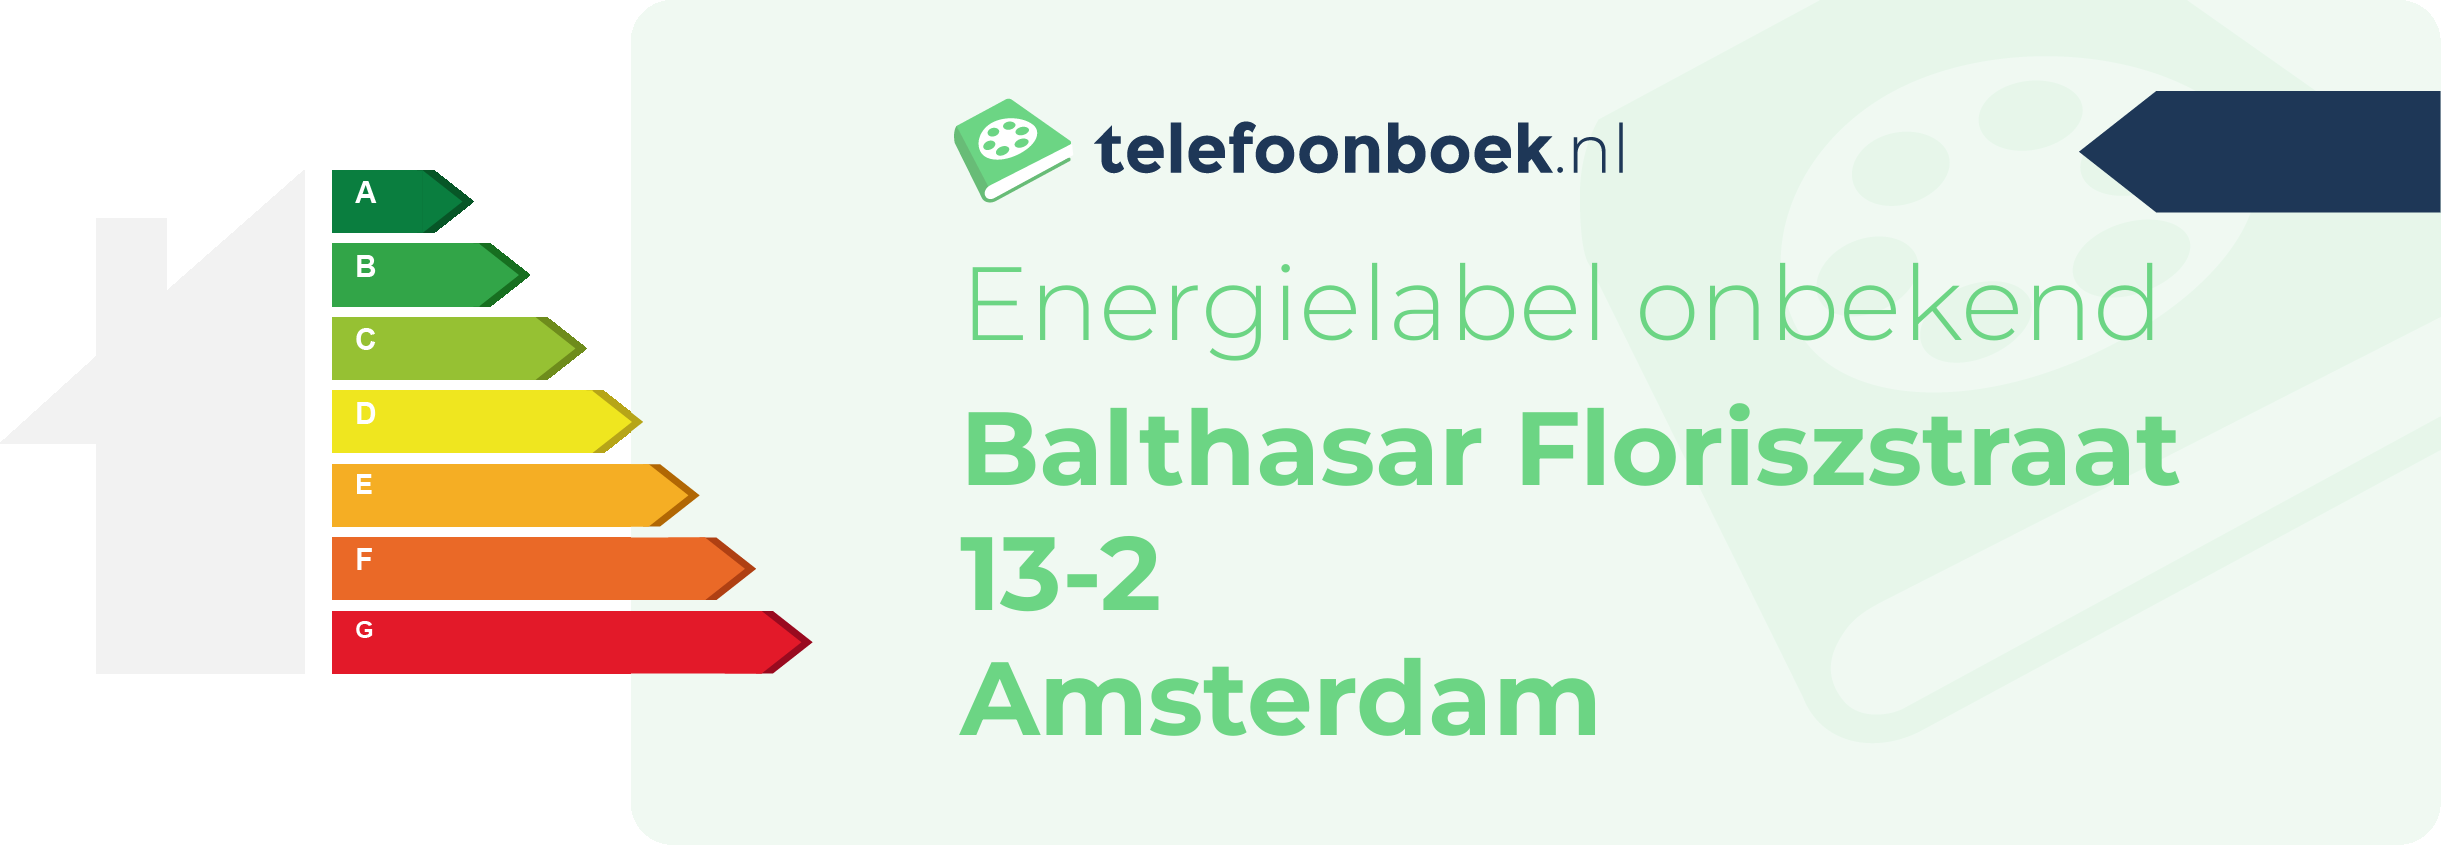 Energielabel Balthasar Floriszstraat 13-2 Amsterdam